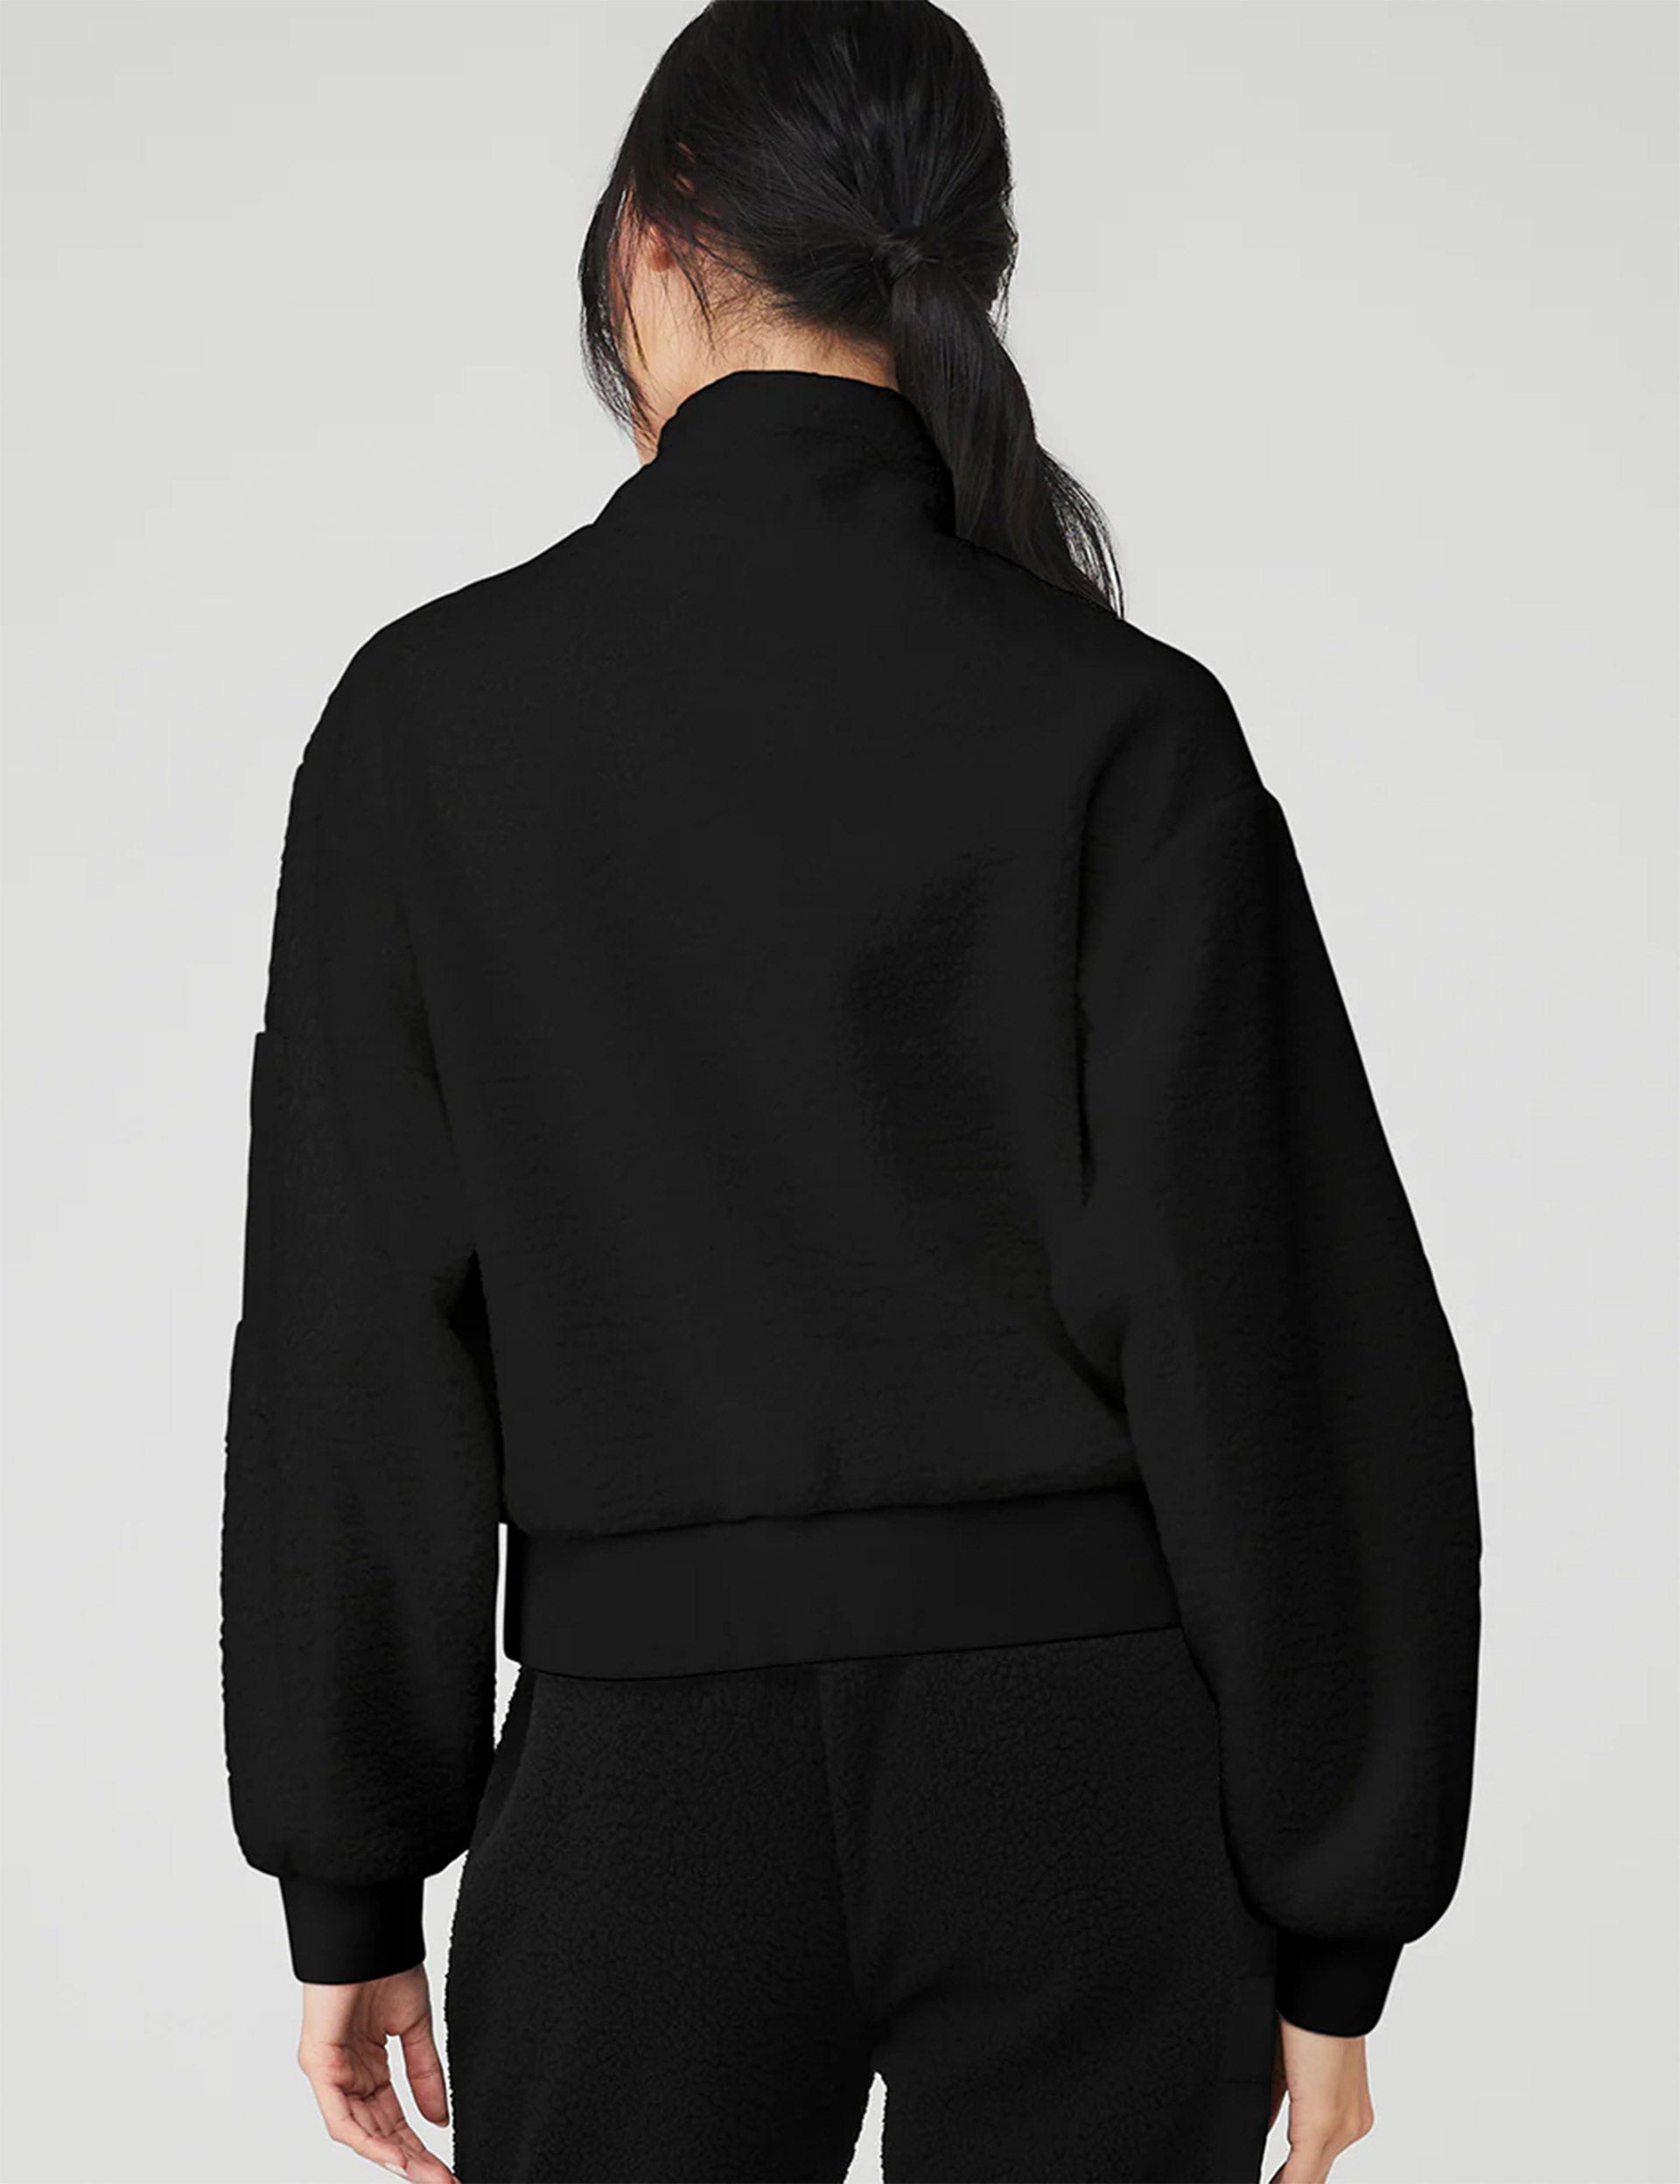 ALO Women's Yoga Solid Black Full Zip Flurry Sherpa Hoodie Jacket  Thumbholes Med